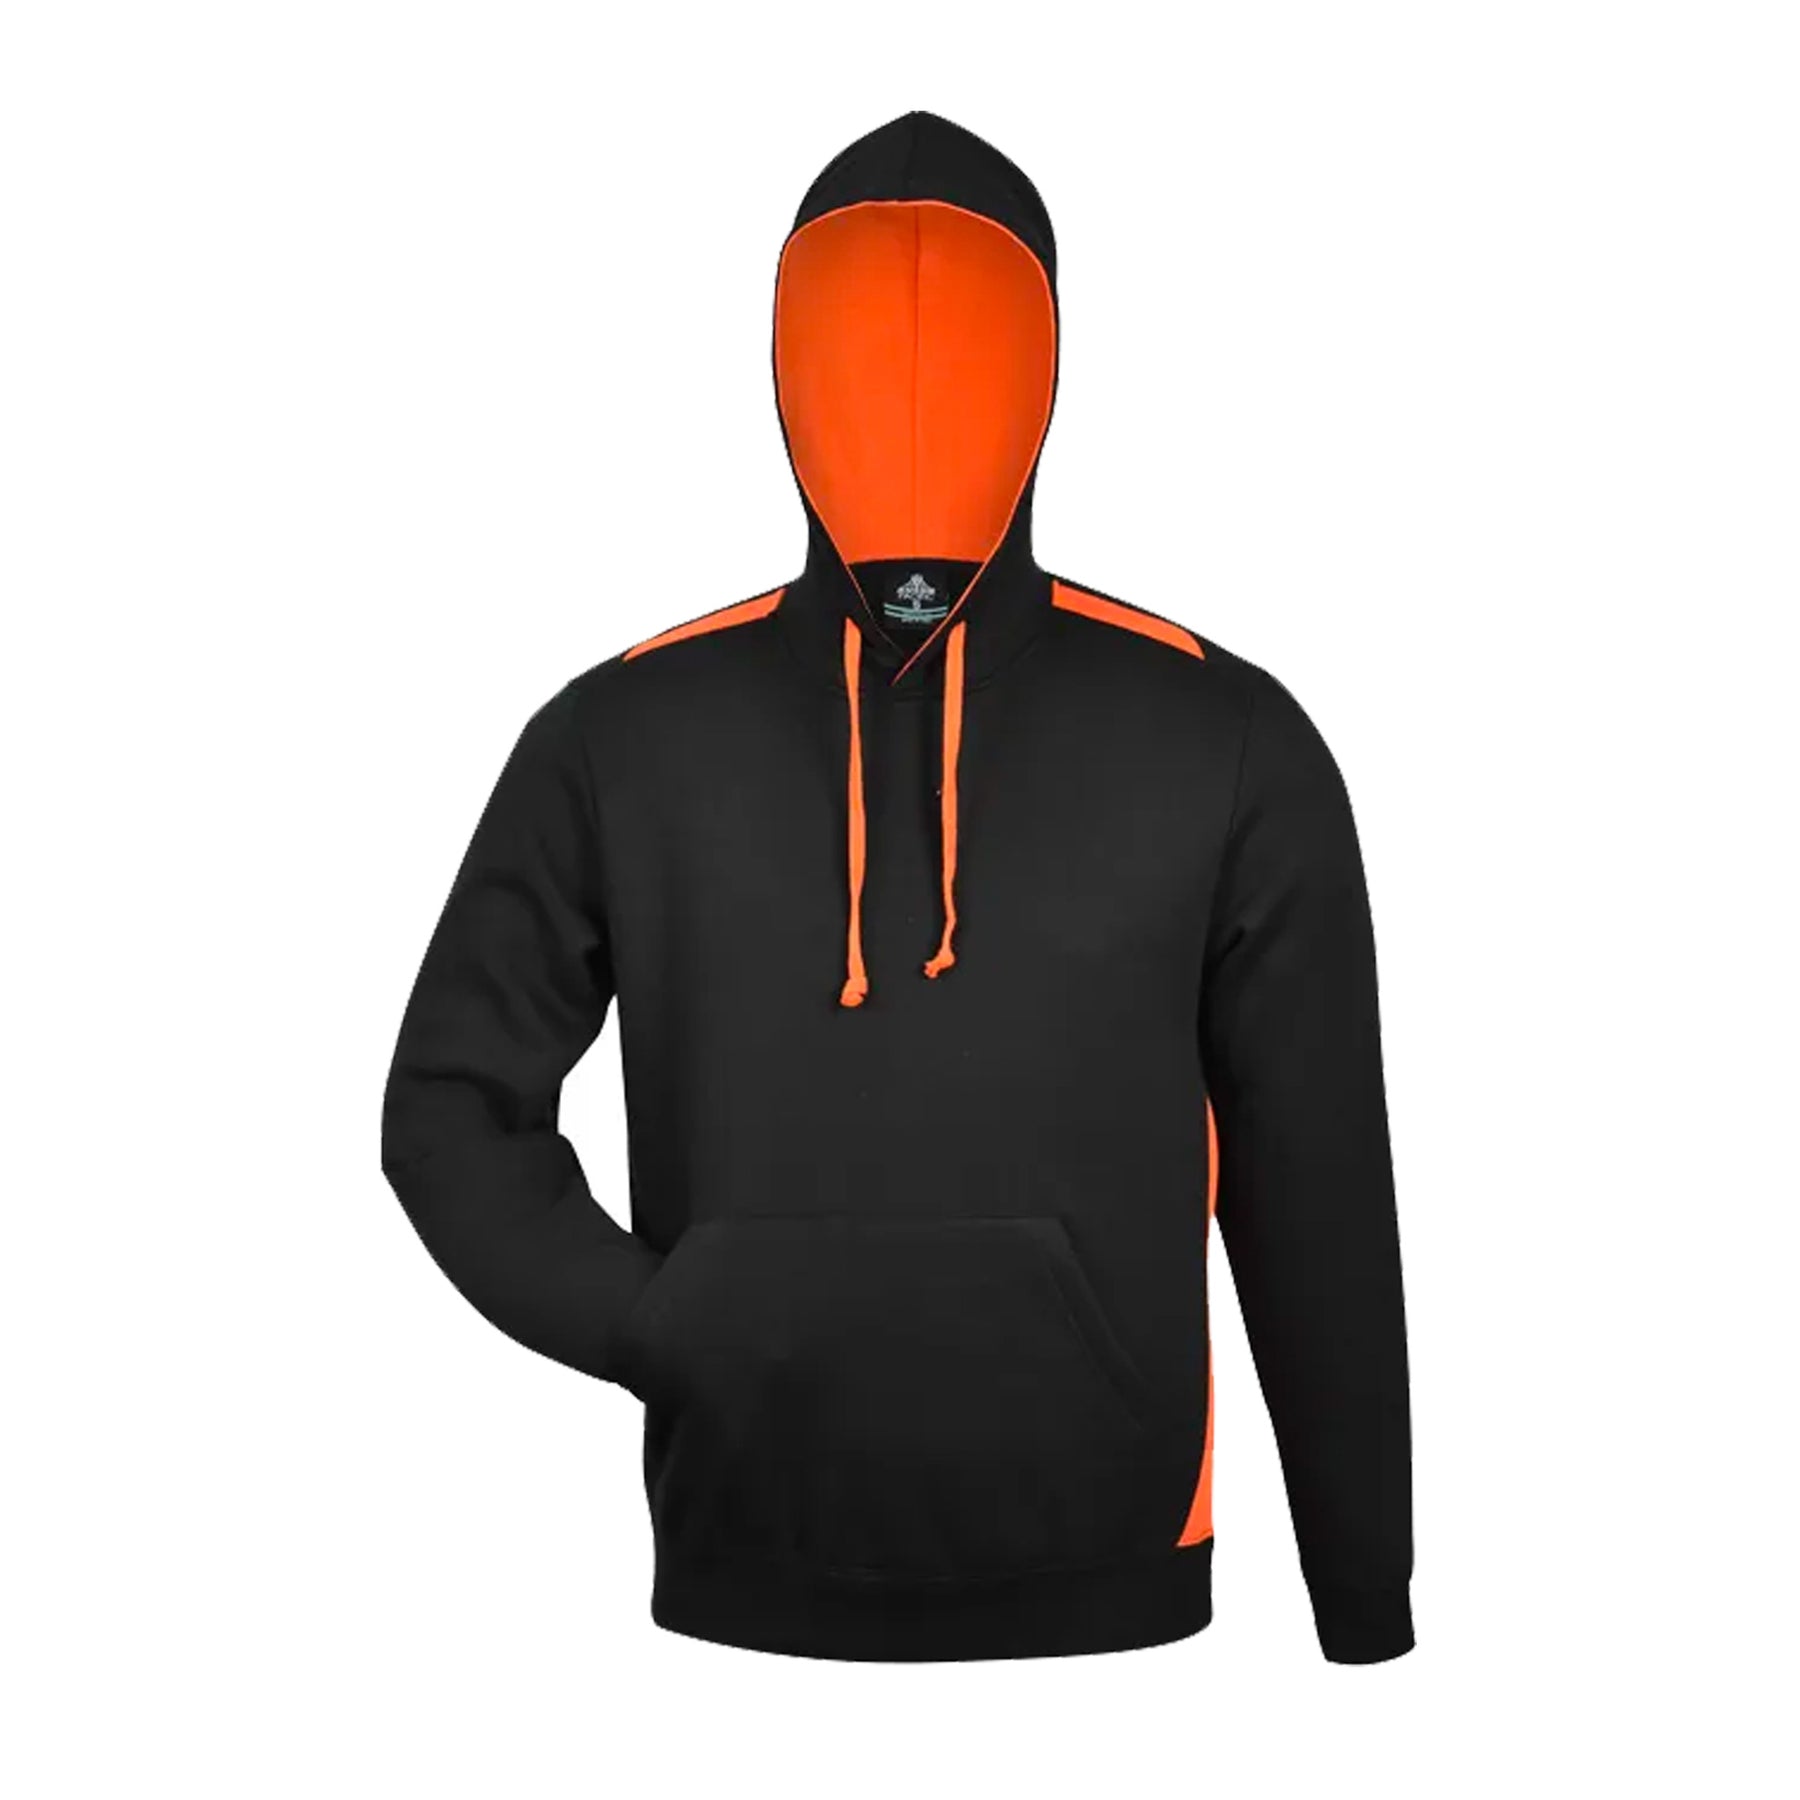 aussie pacific paterson mens hoodies in black orange